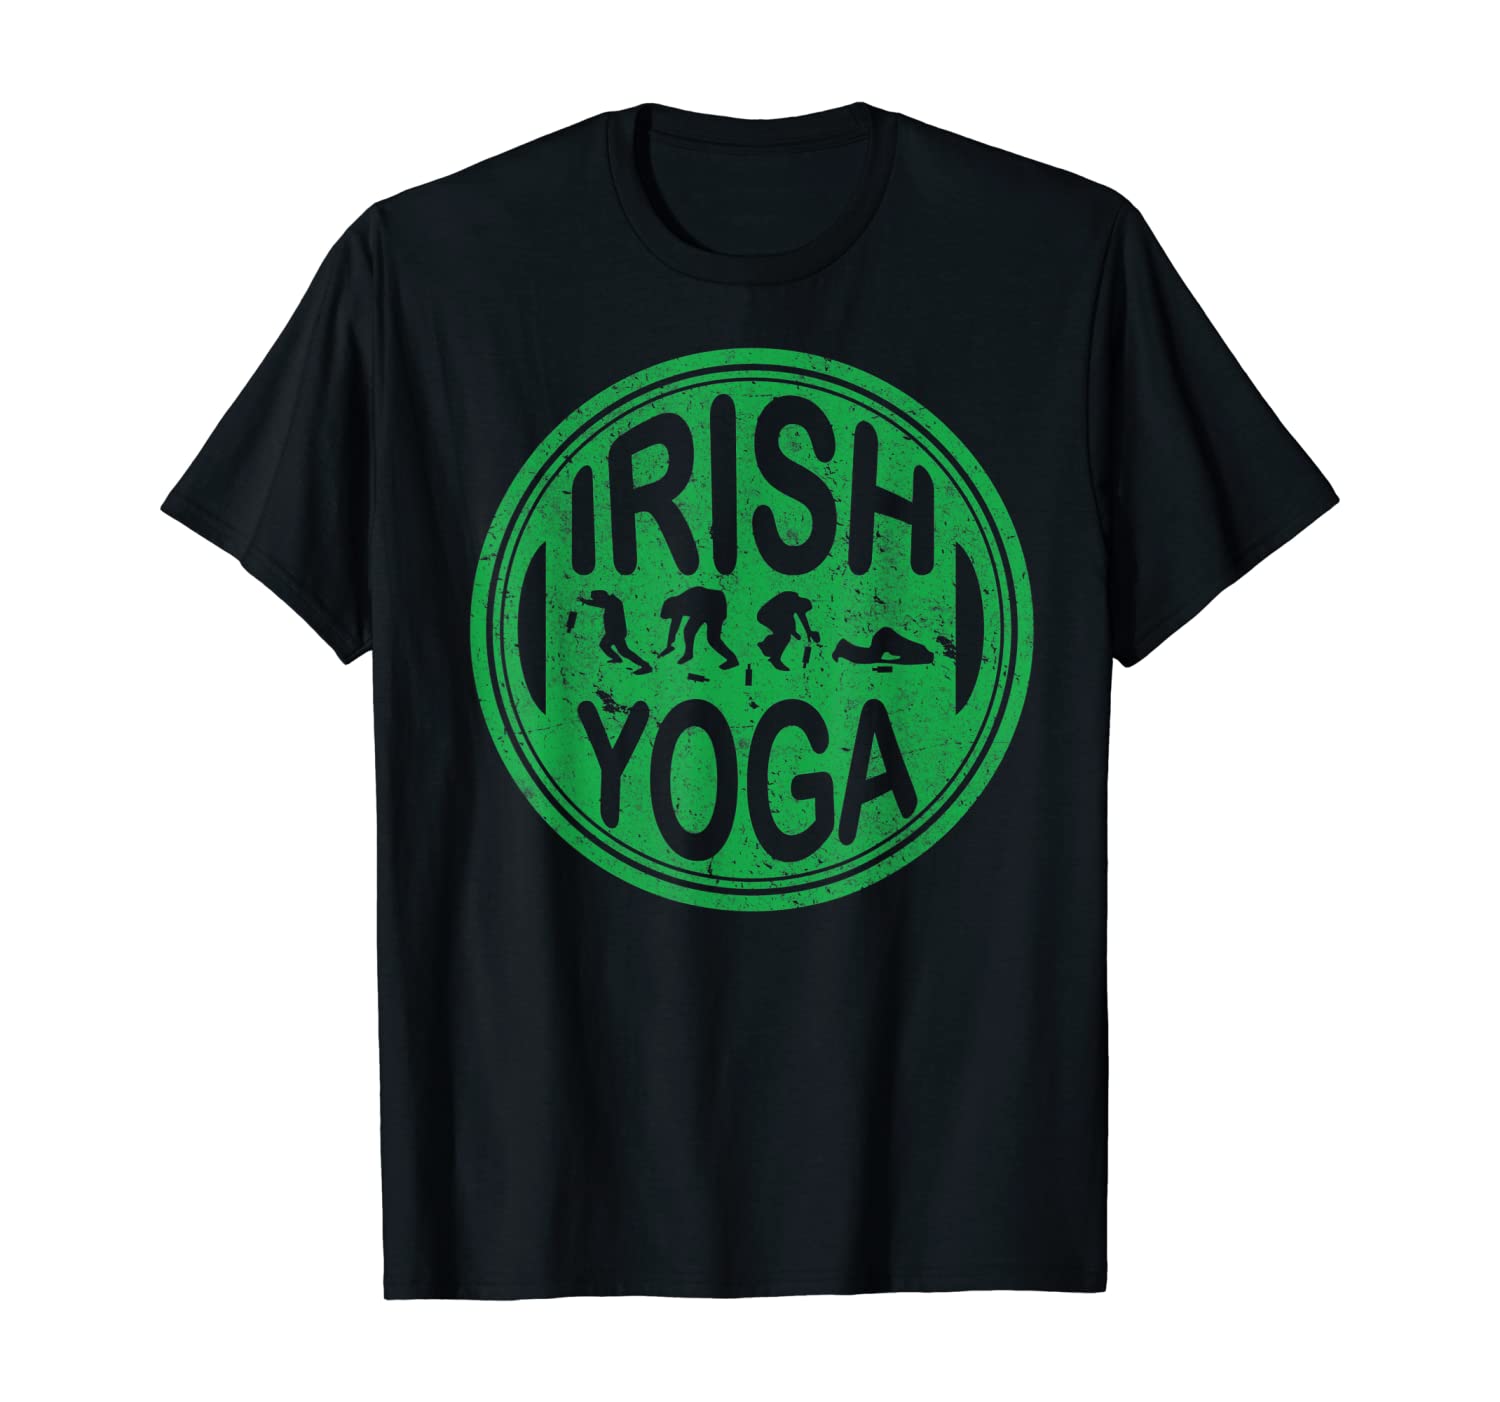 Irish Yoga St Patrick's Day | Poster